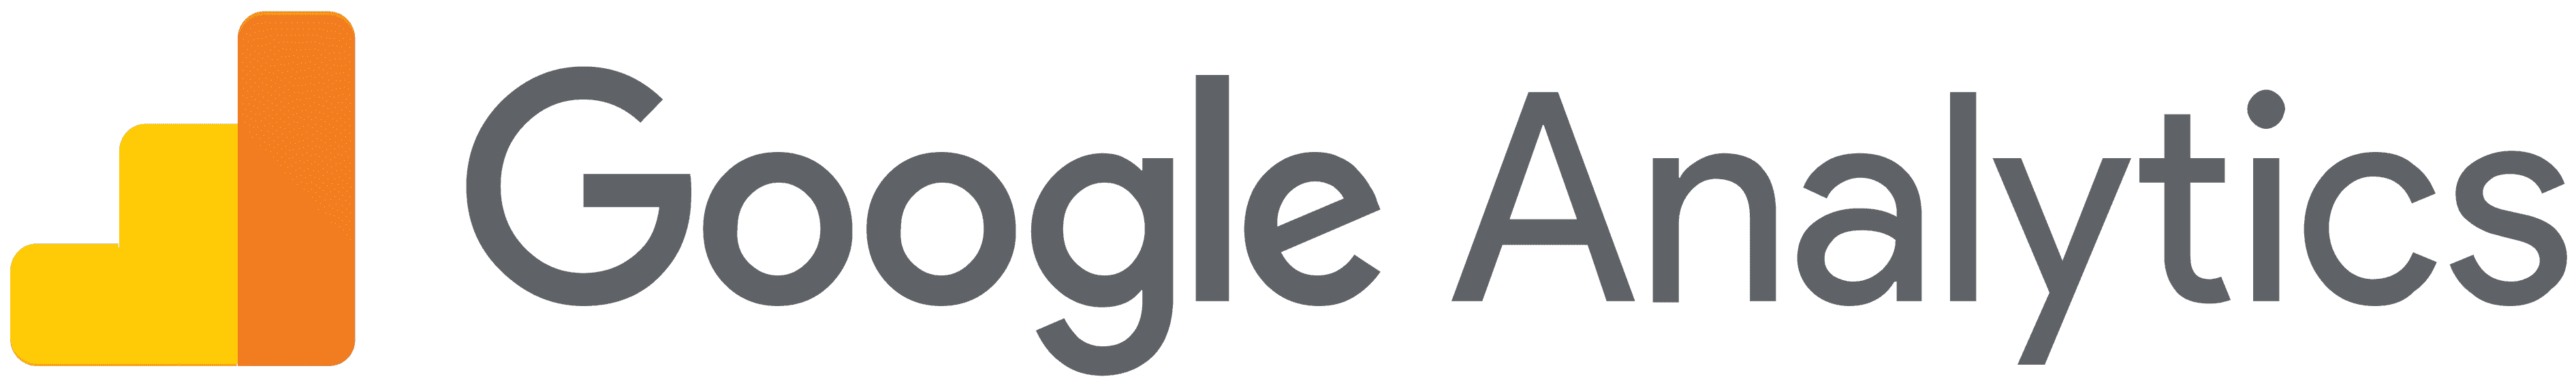 Google-Analytics-Logo-2016-2019